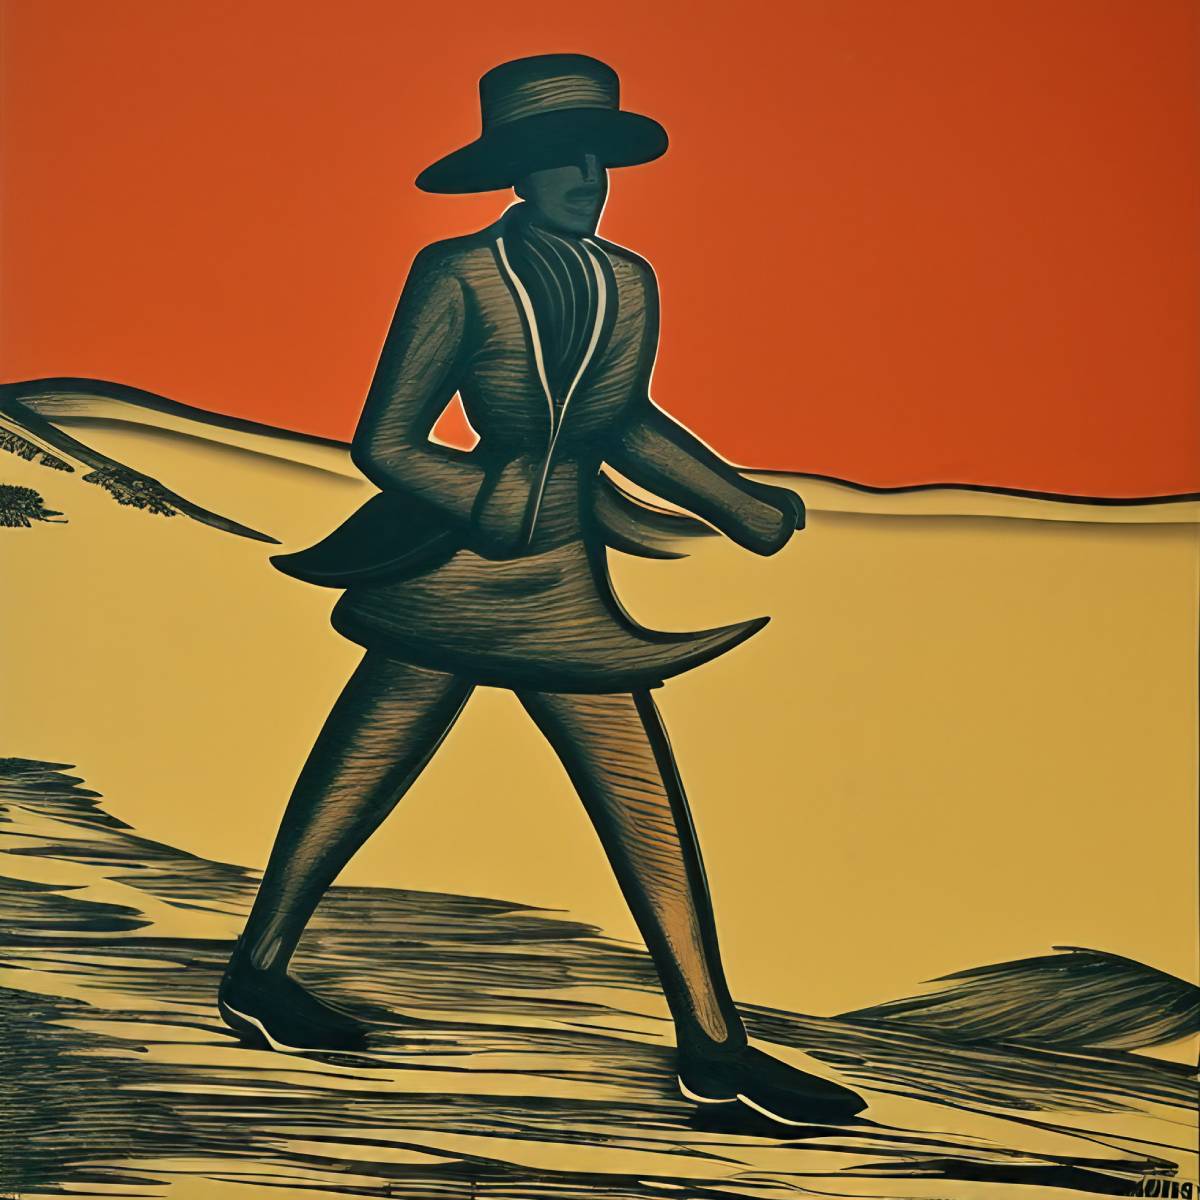 An artist's depiction of Maria Lorena Ramirez running in the desert. (Credit: Odd Feed)